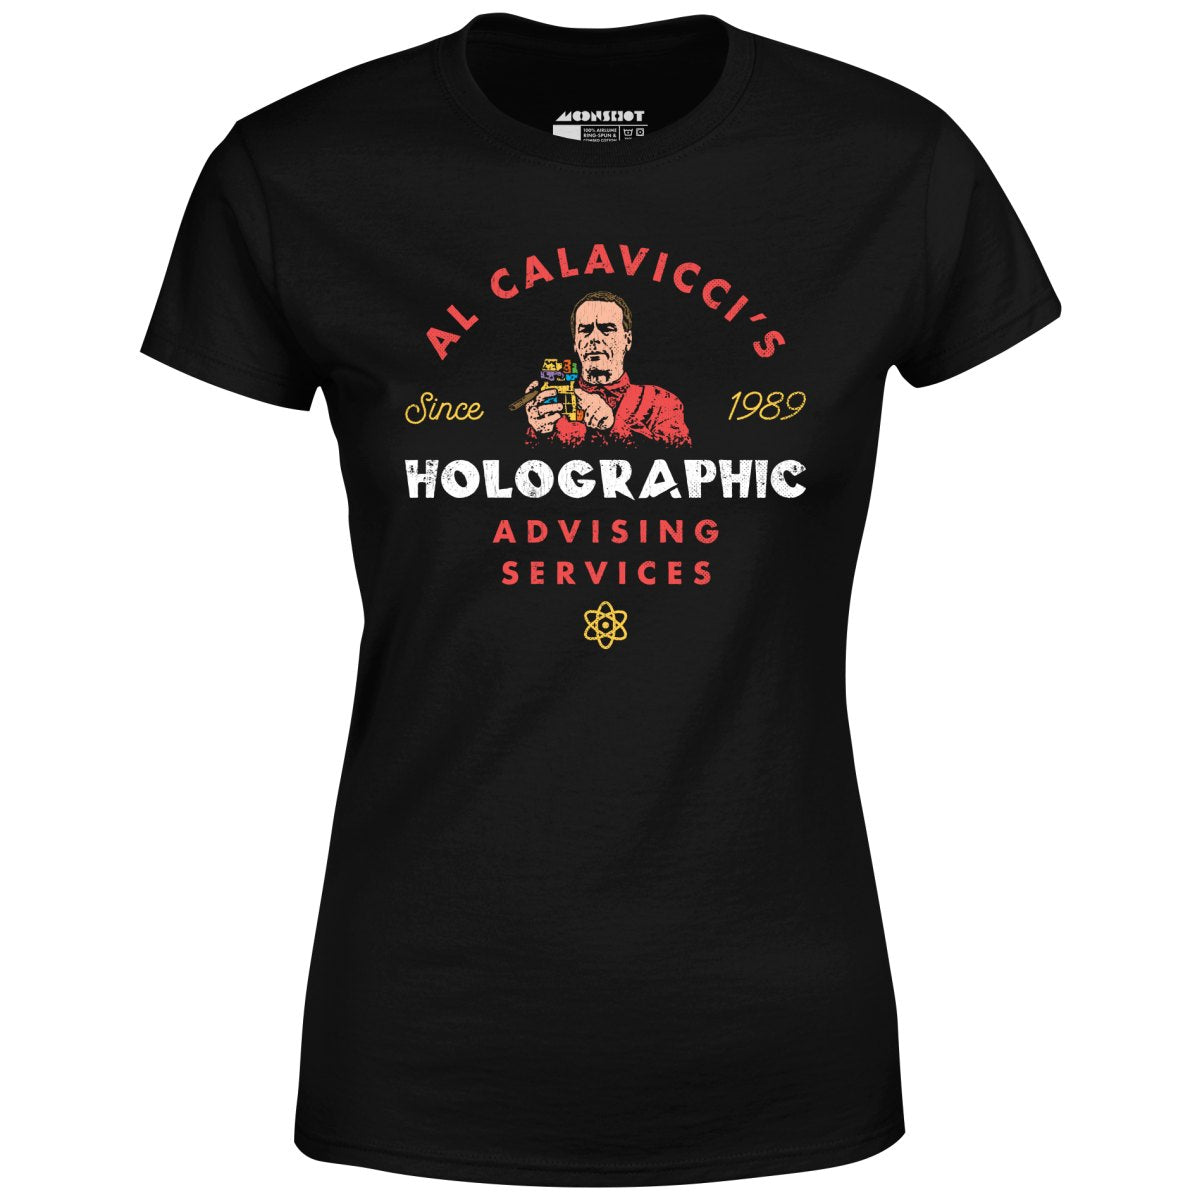 Al Calavicci's Holographic Advising Services - Women's T-Shirt